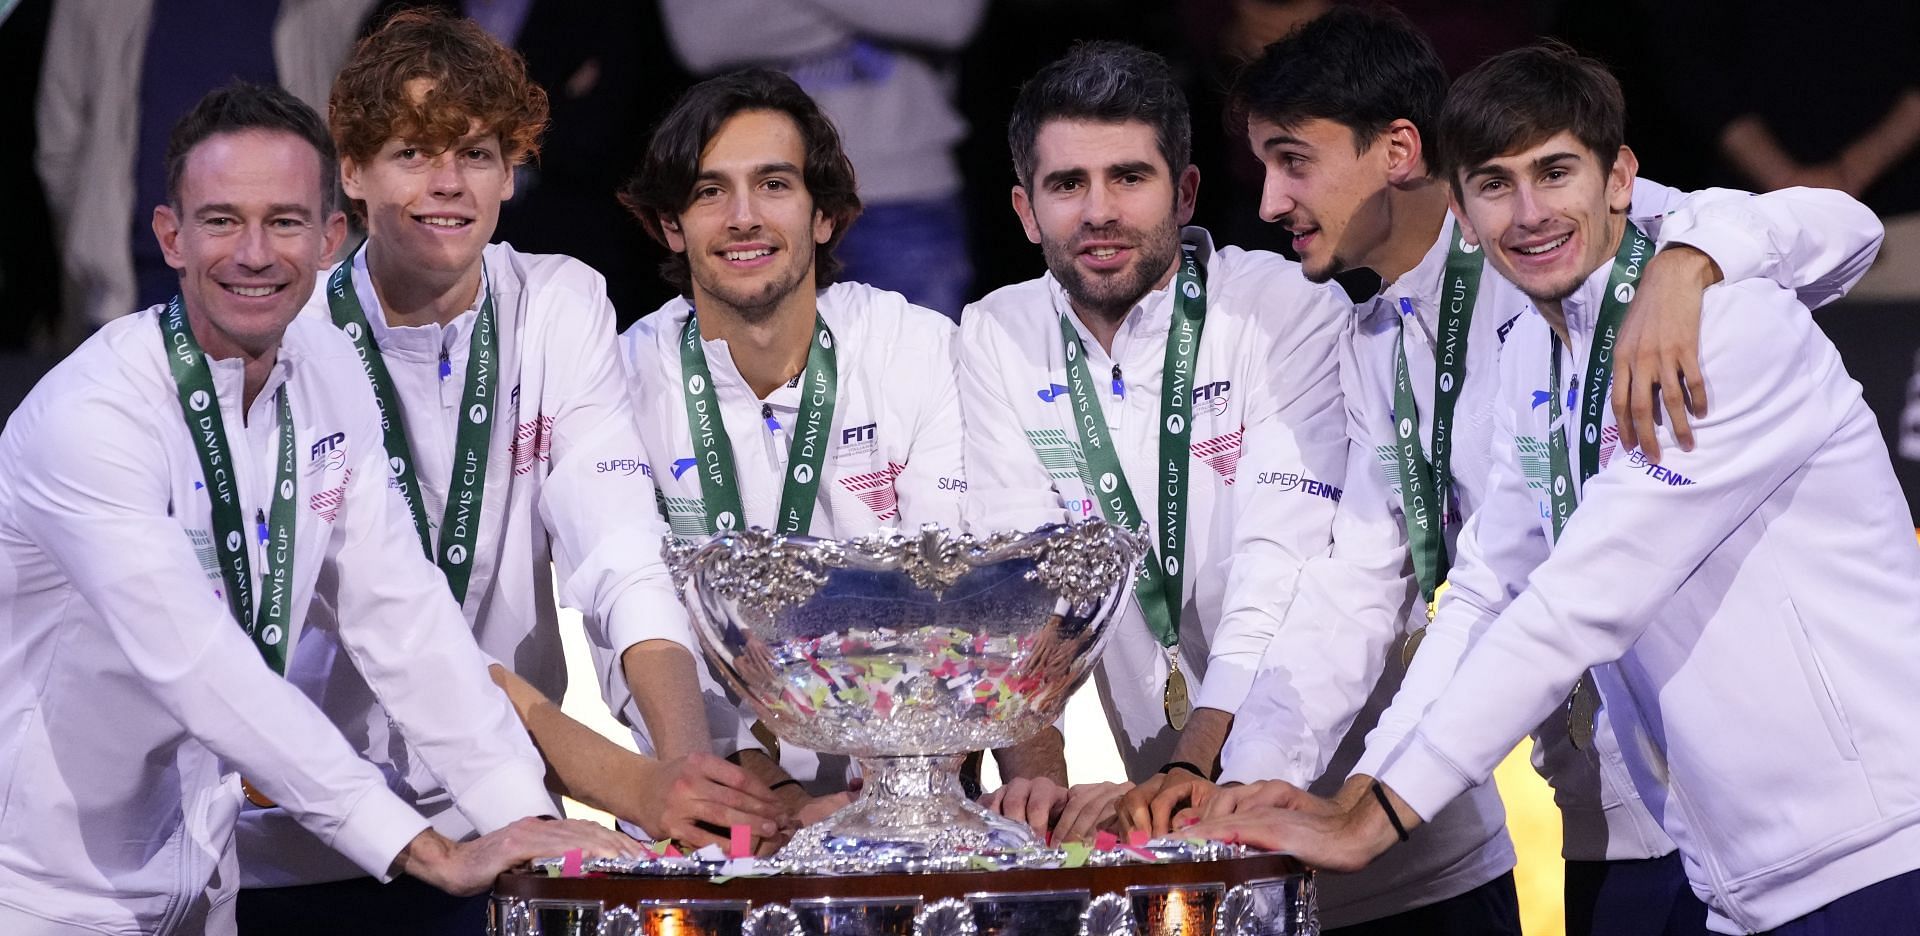 Jannik Sinner, Matteo Arnaldi, and the Italian team pictured after winning the 2023 Davis Cup title